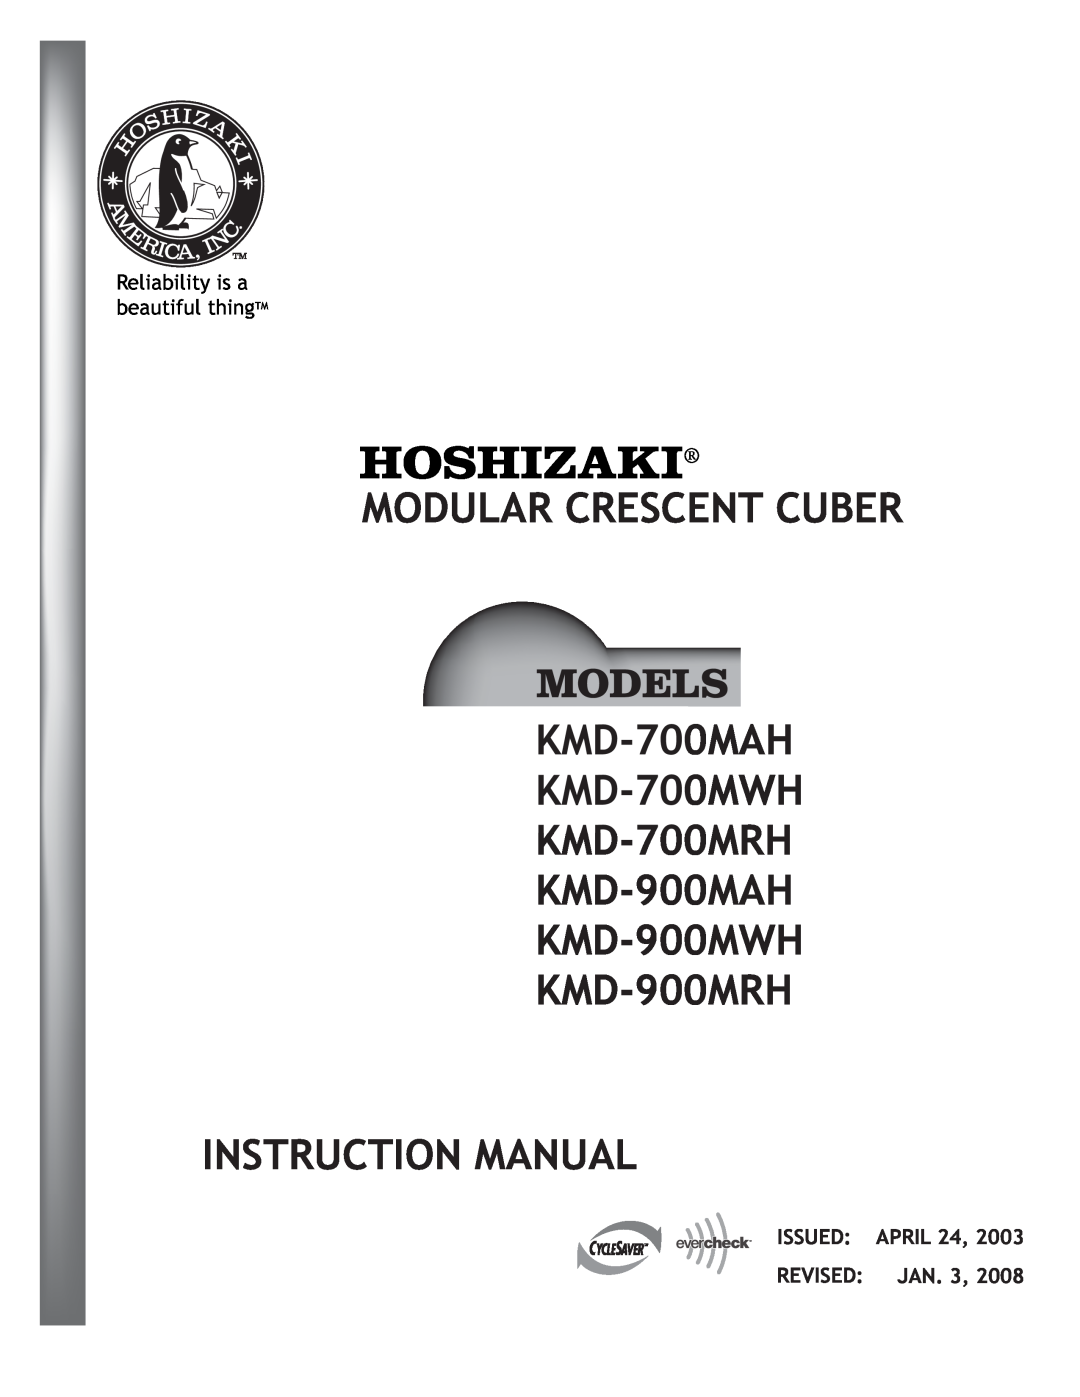 Hoshizaki instruction manual MODULAR CRESCENT CUBER KMD-700MAH KMD-700MWH KMD-700MRH KMD-900MAH, Issued, 2003, Revised 